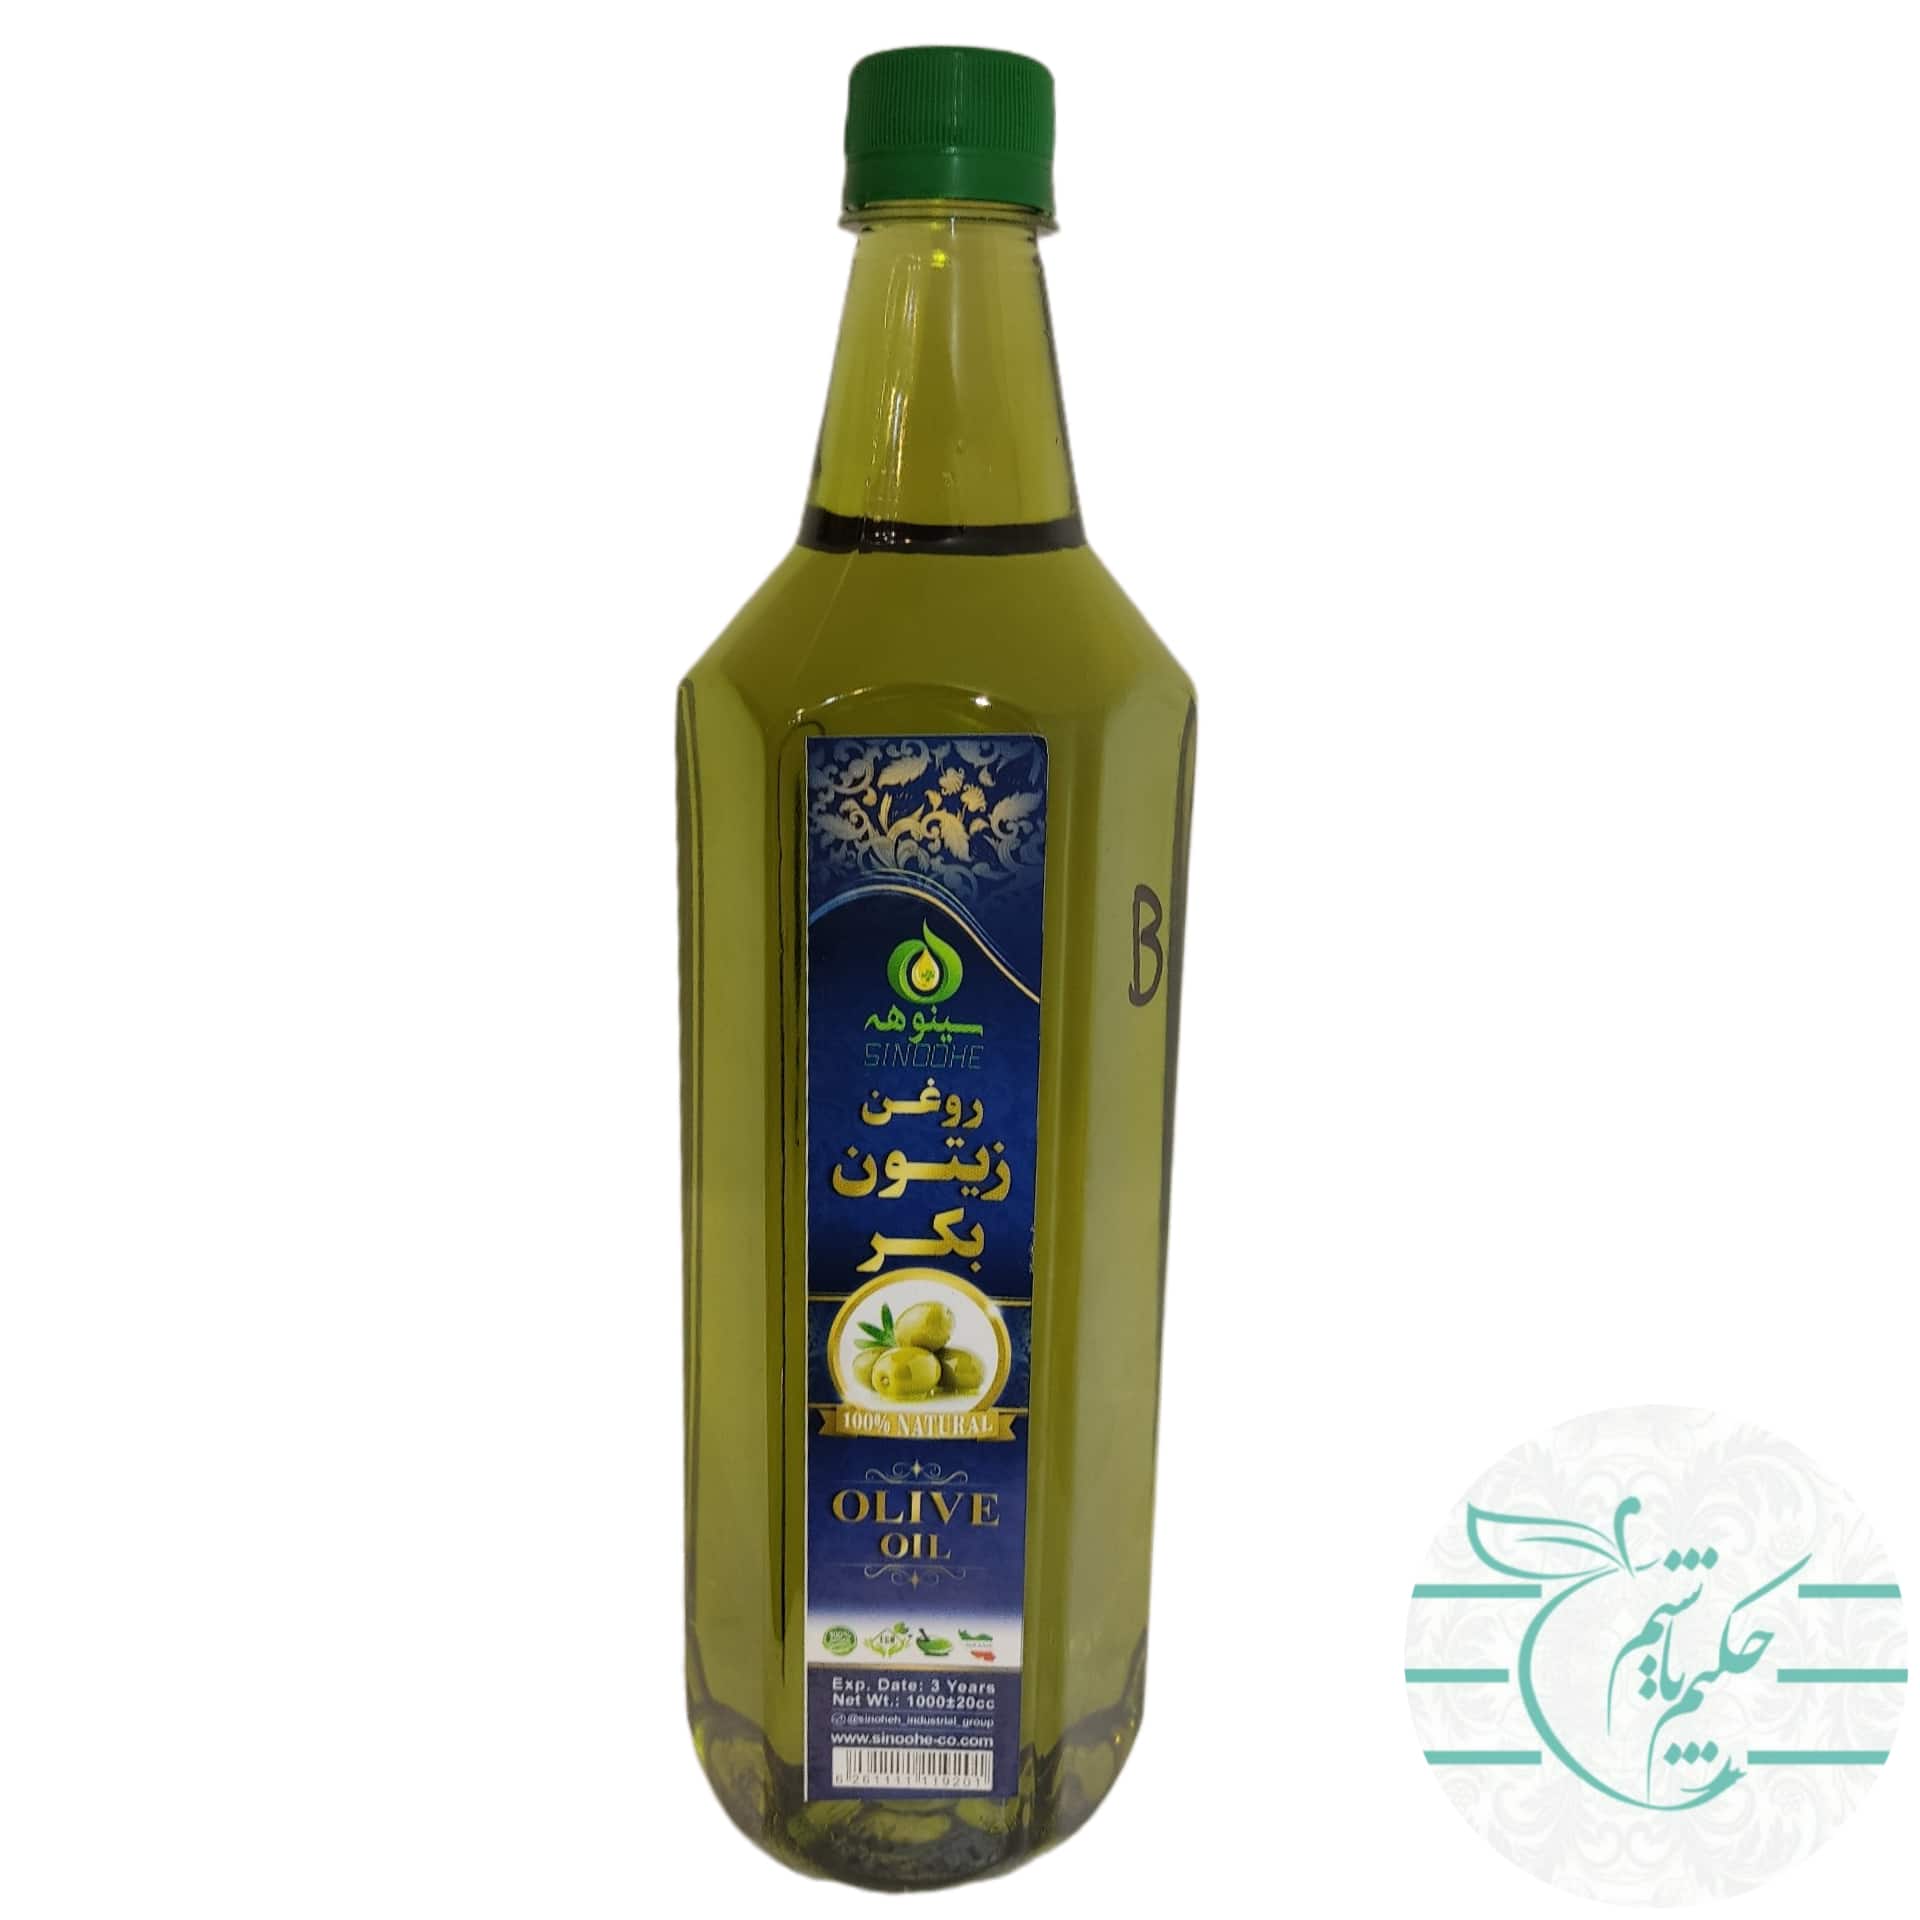 One liter of virgin olive oil min